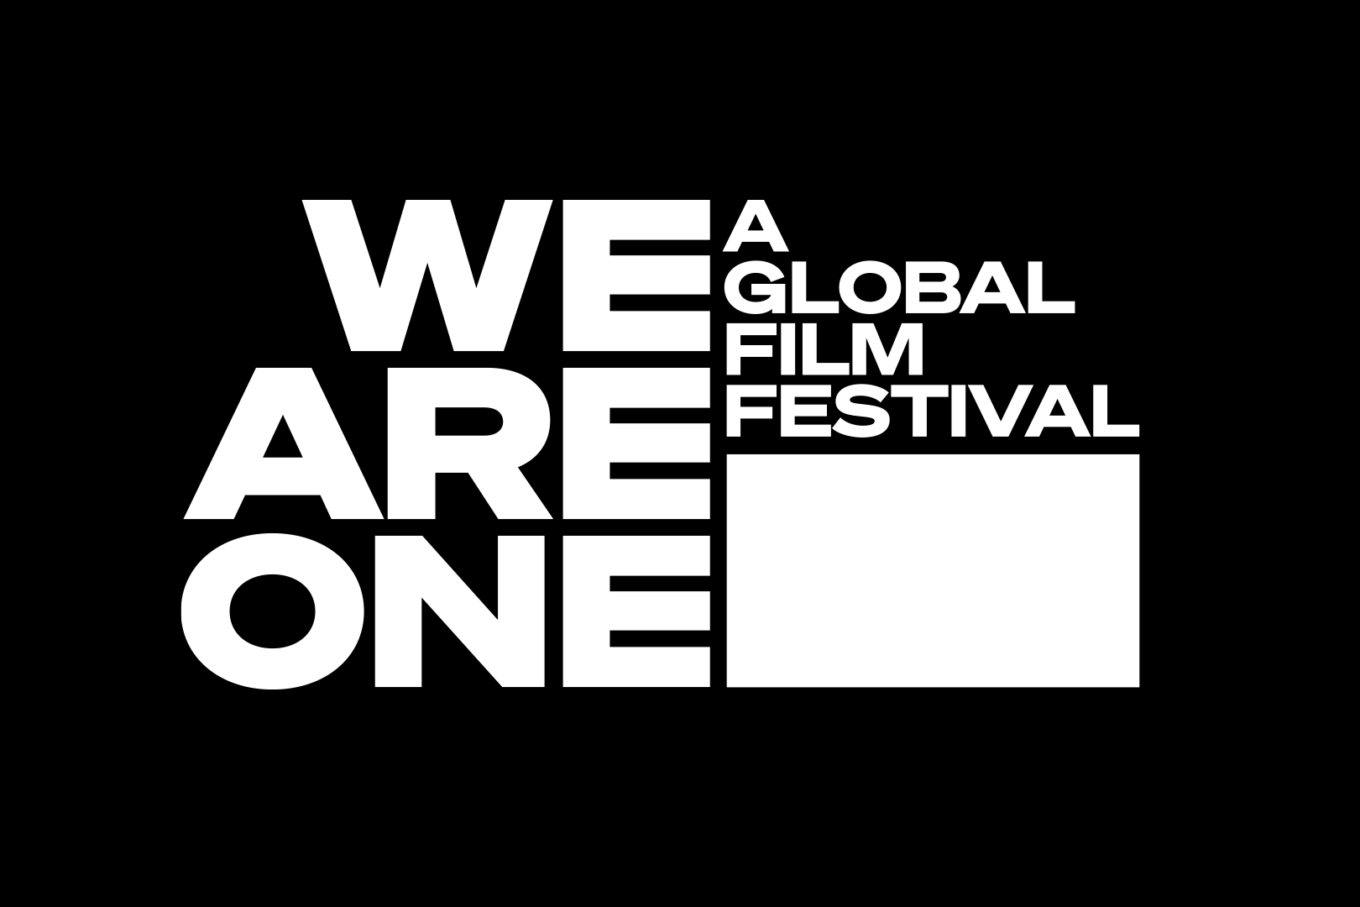 Festival film terbesar dunia We Are One: A Global Film Festival